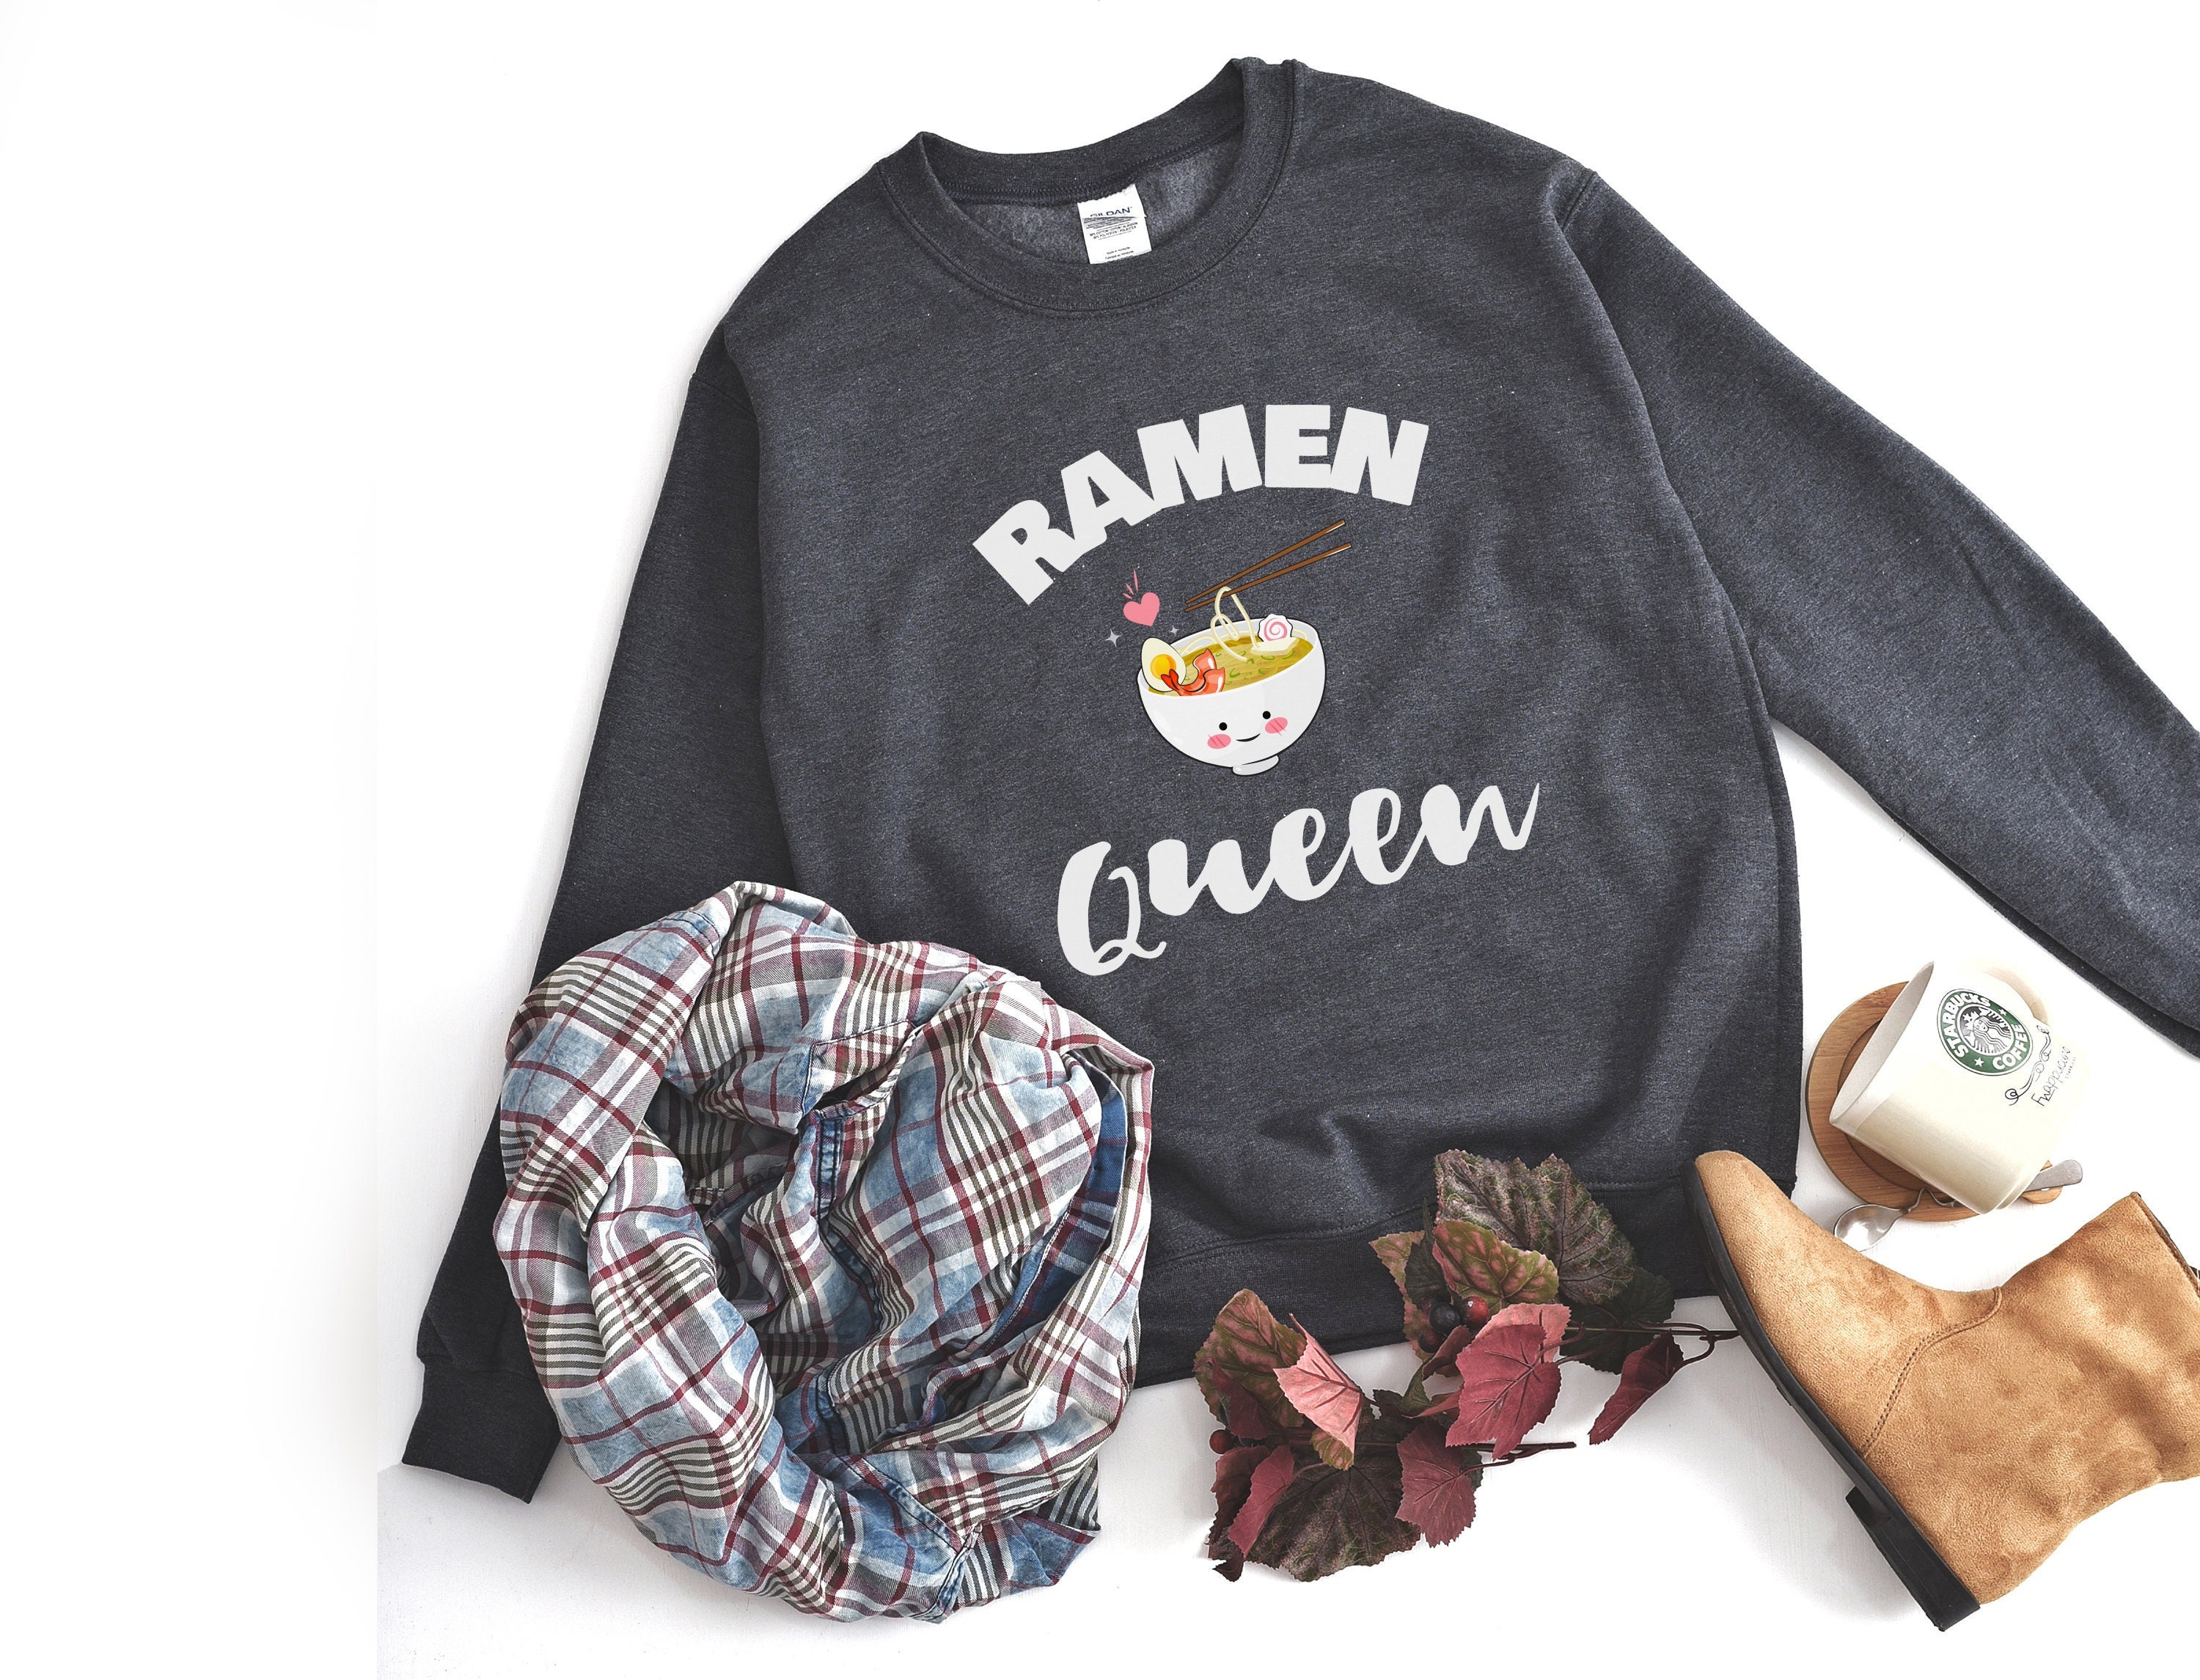 Ramen Queen Cute Sweatshirt With Saying Jumper For Womens Sweater Funny Shirt Teen Ramen Noodle Novelty Gift Her